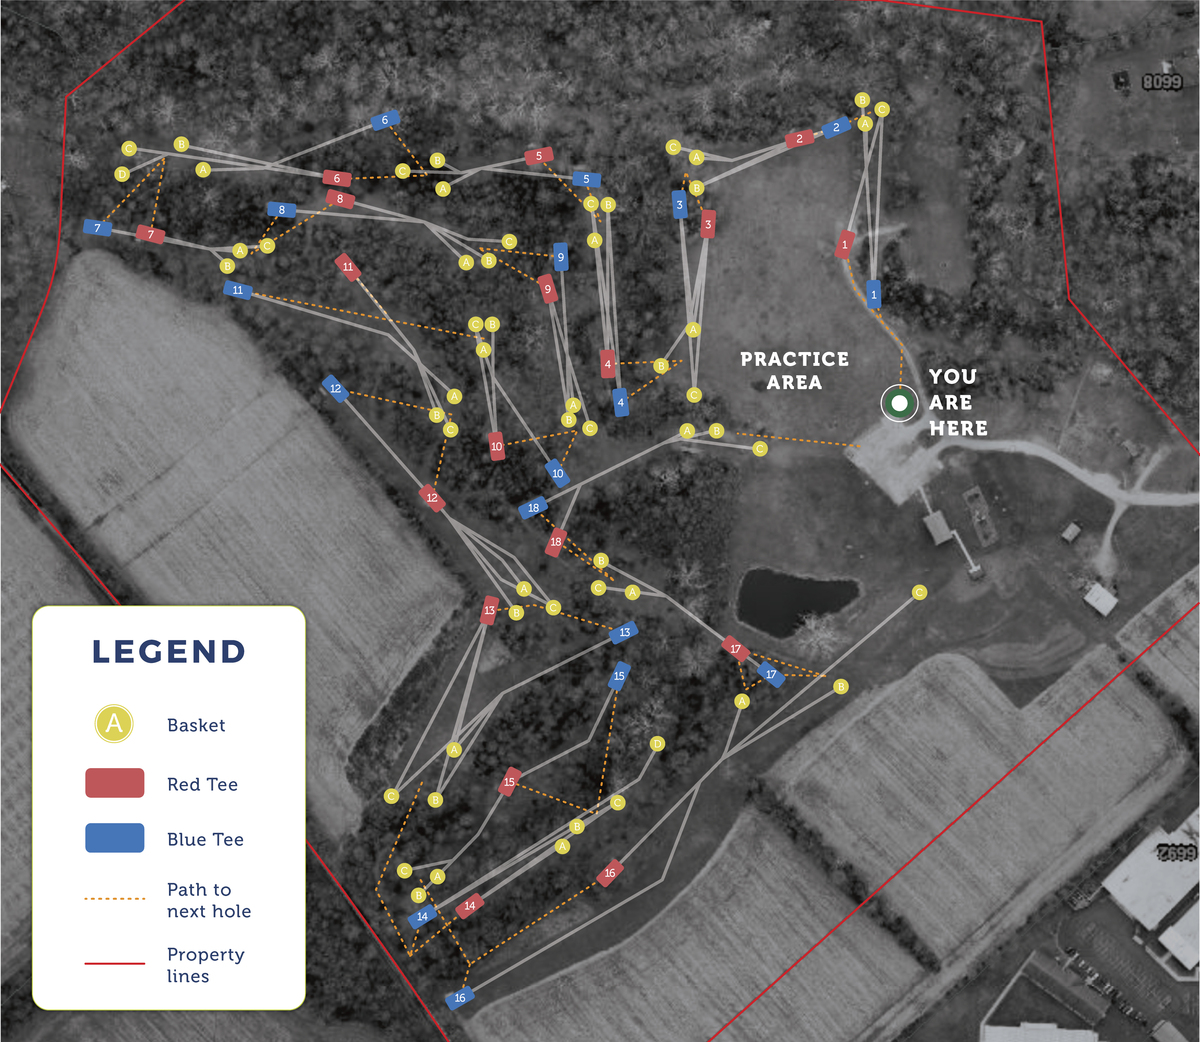 Disc Golf Course Map